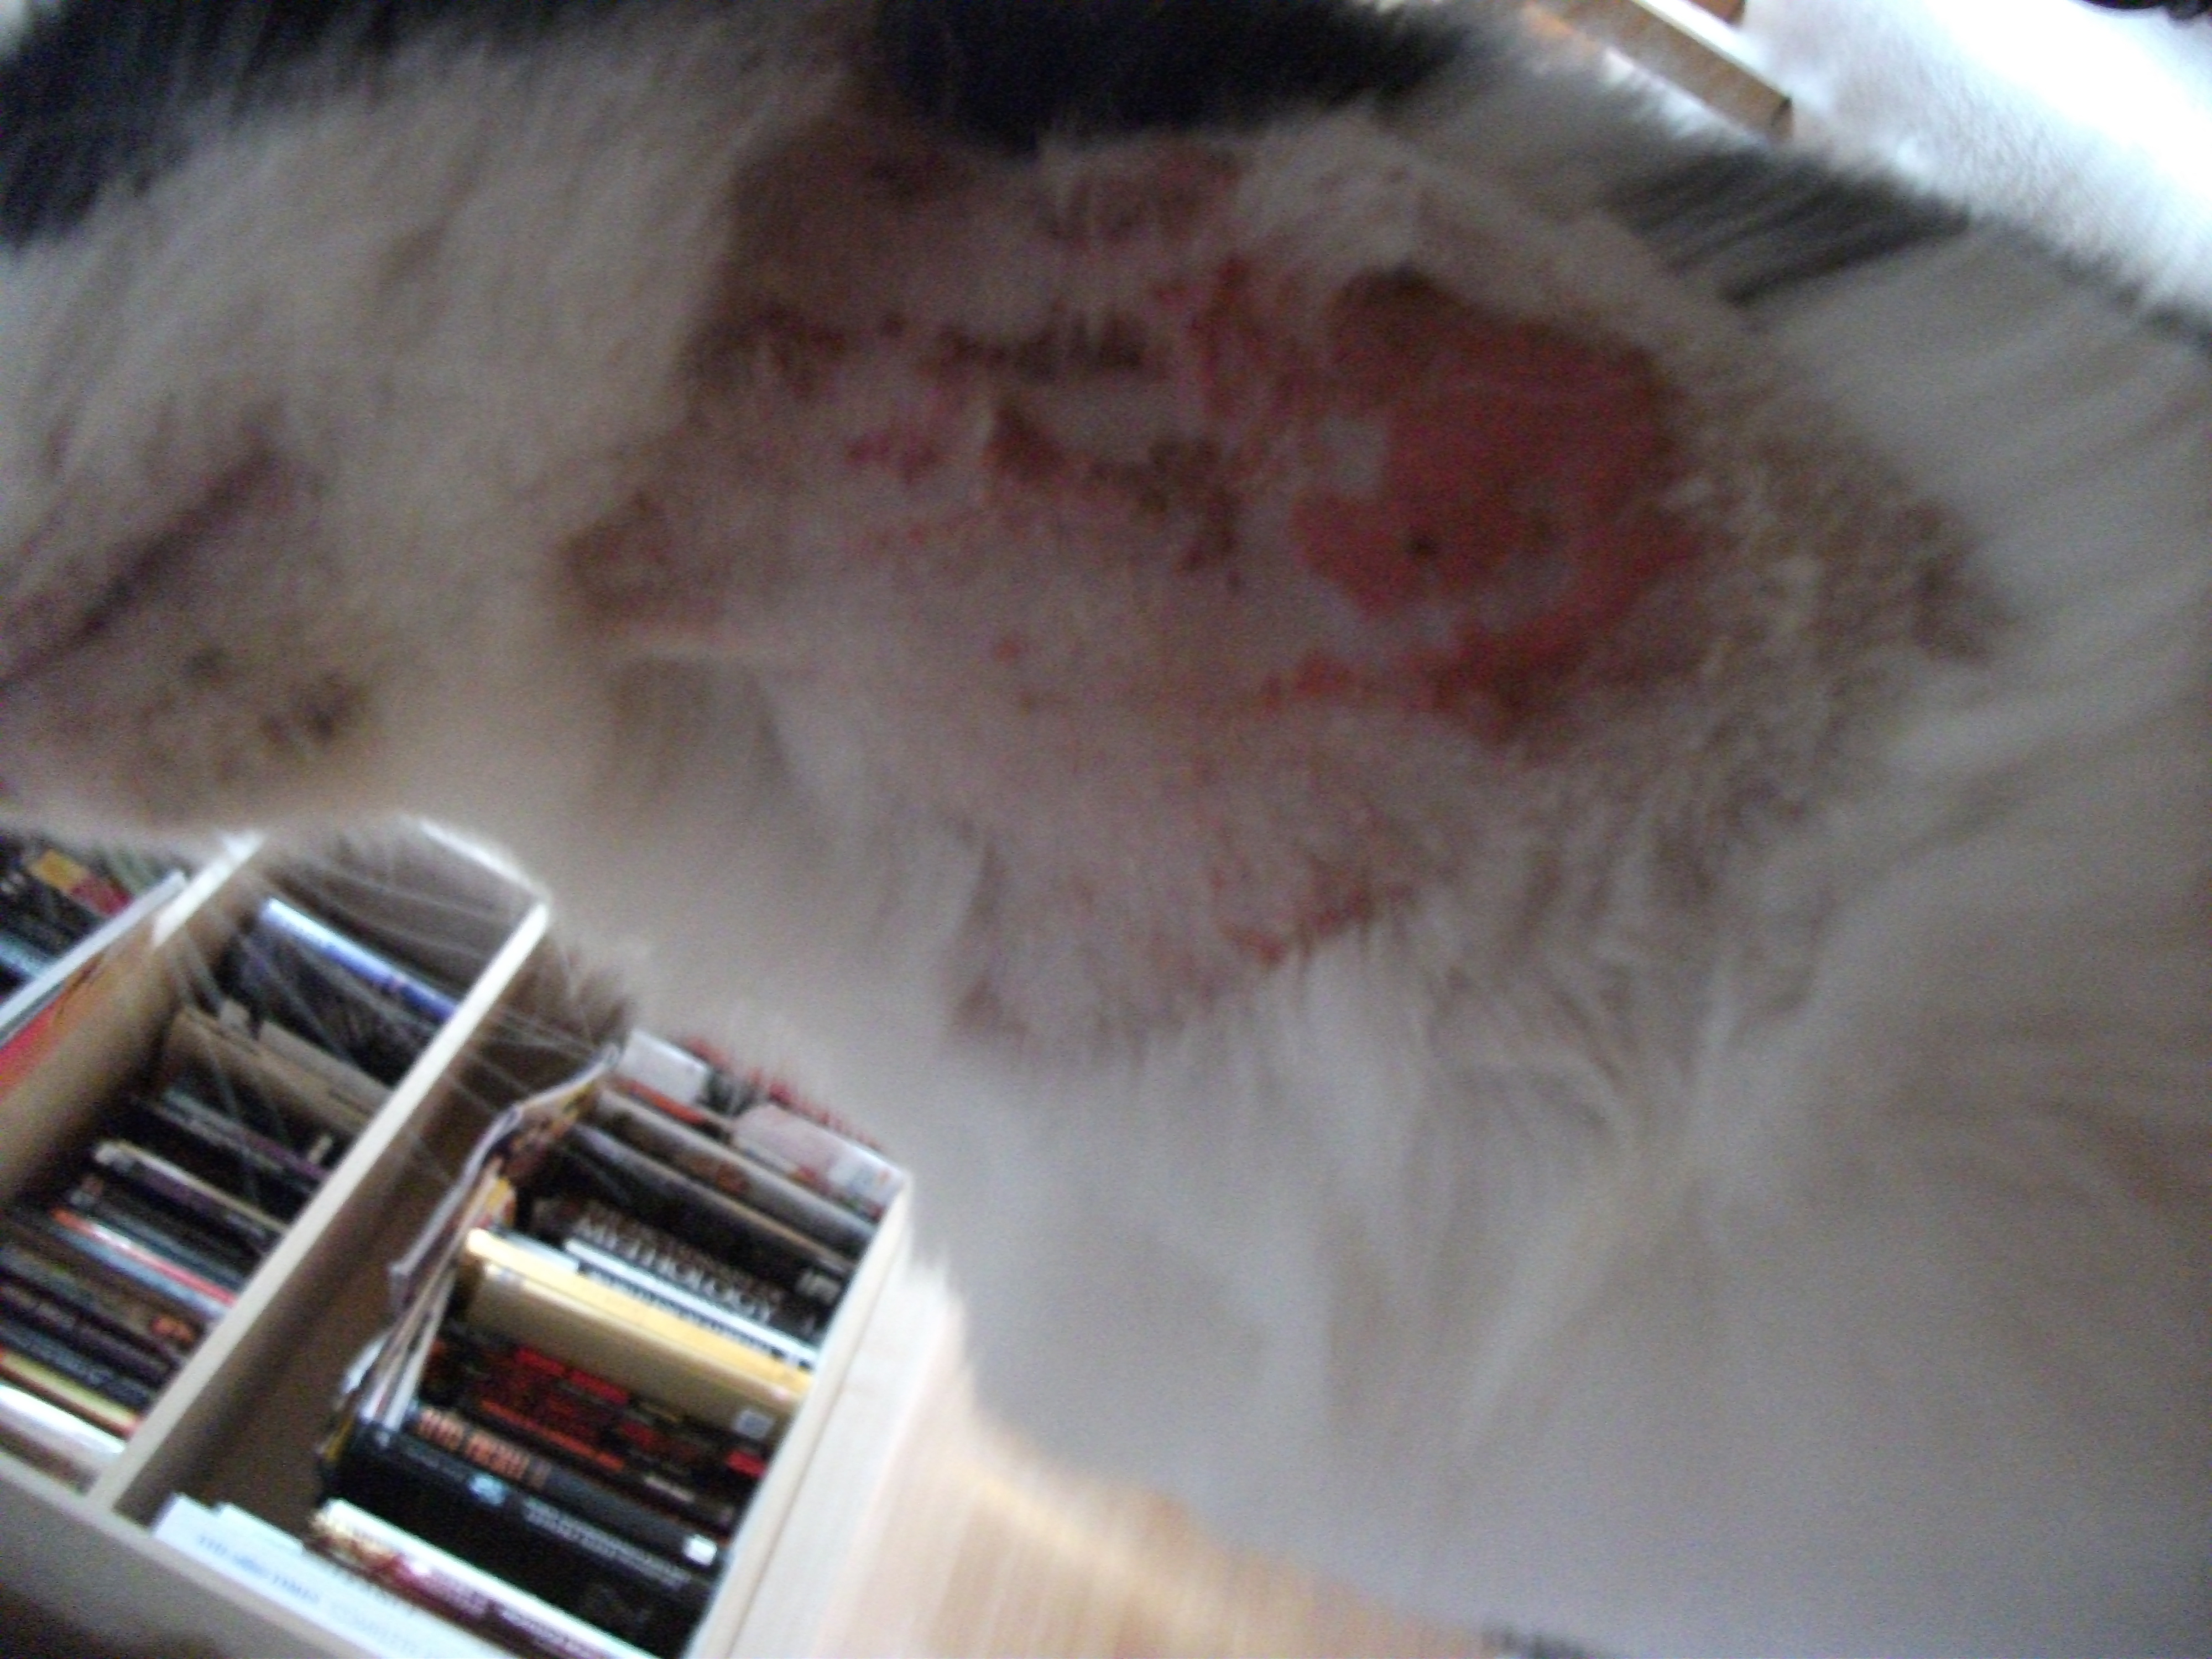 Home Remes For Cat Flea Allergy Dermais - Homemade Ftempo